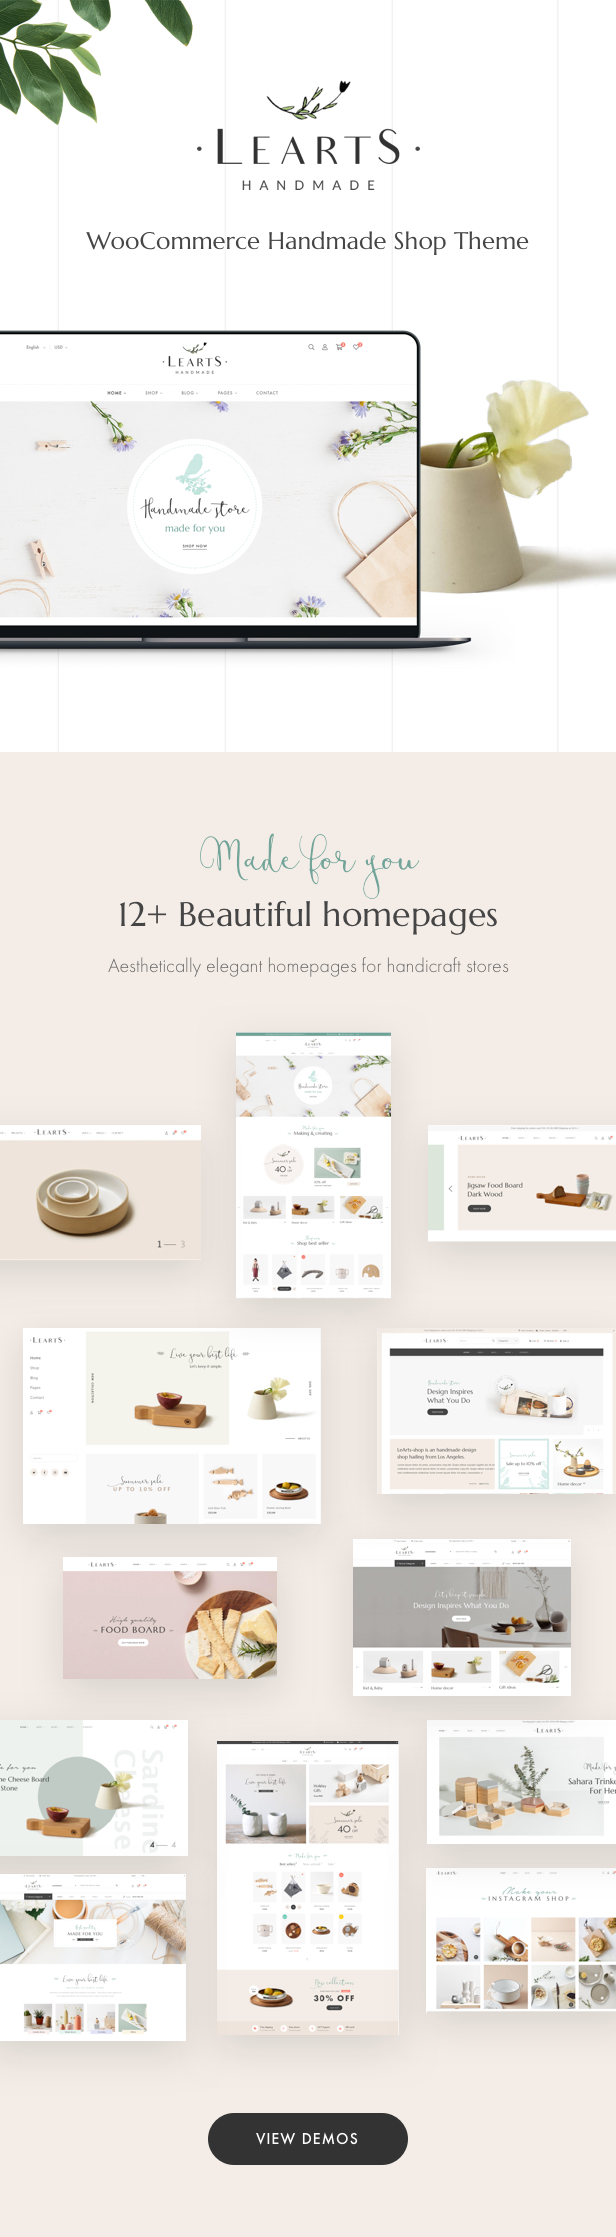 Handmade shop WooCommerce WordPress Theme - 12 Beautiful Premade Homepages